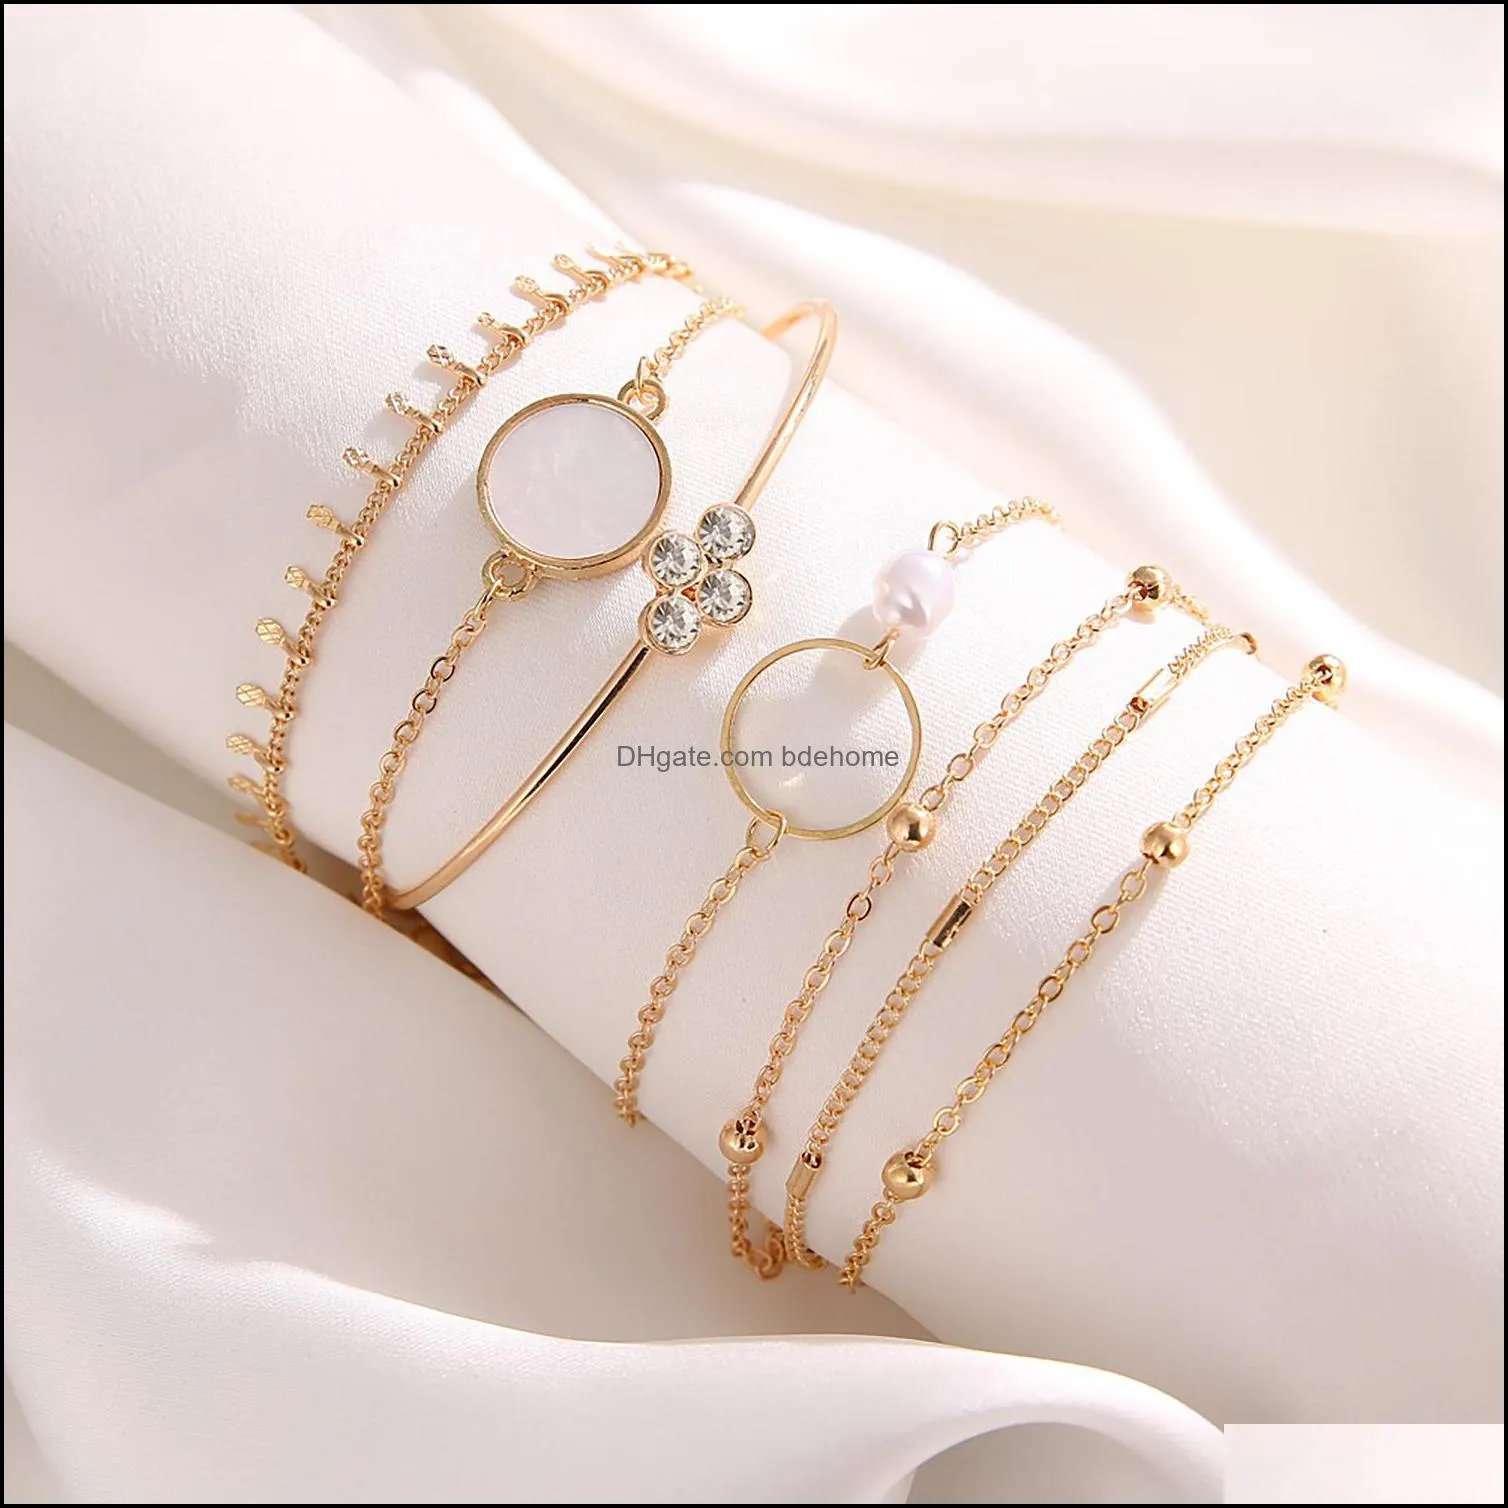 6pcs fashion crystal bracelets sets for women gold charms hand chain stackable wrap bangle adjustable bracelet jewelry